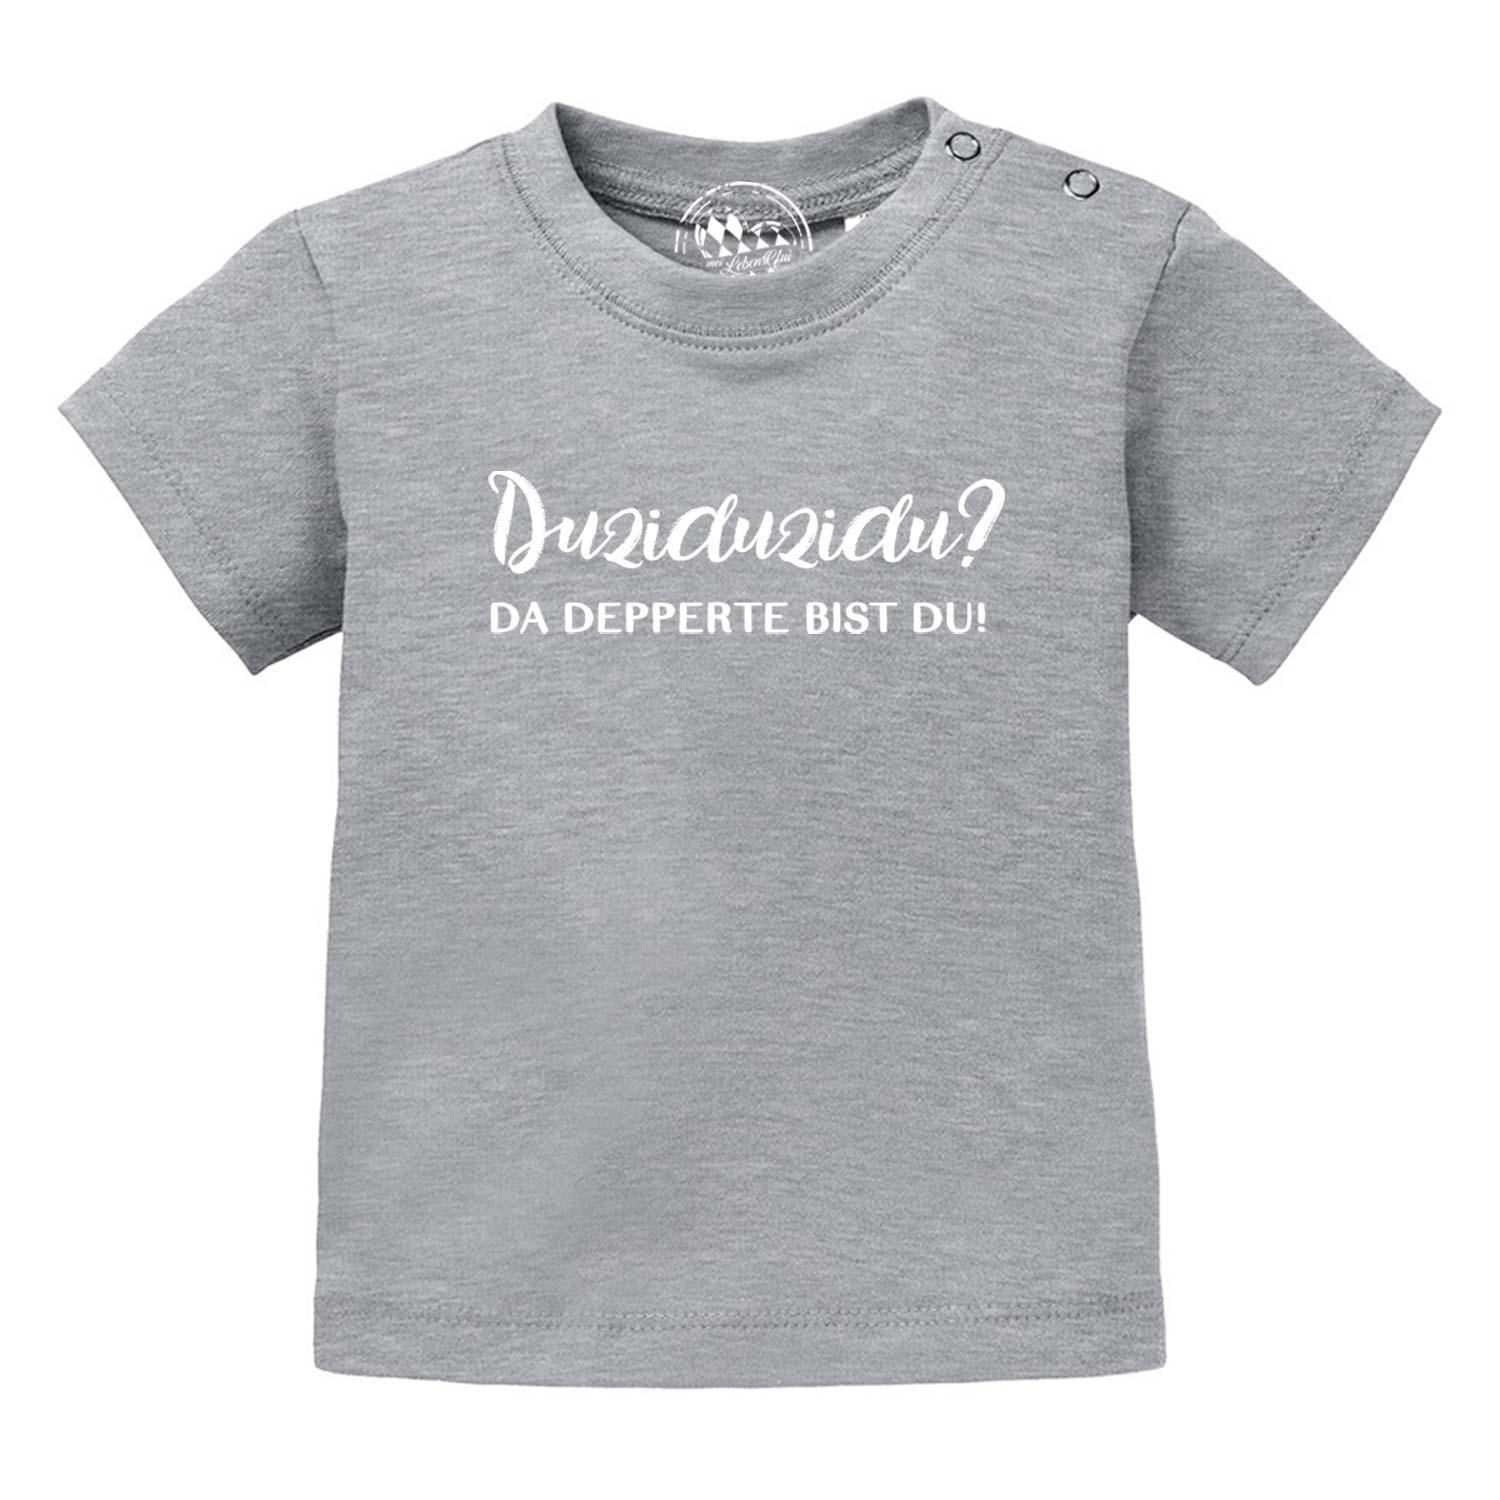 Baby T-Shirt "Duziduzidu…" - bavariashop - mei LebensGfui